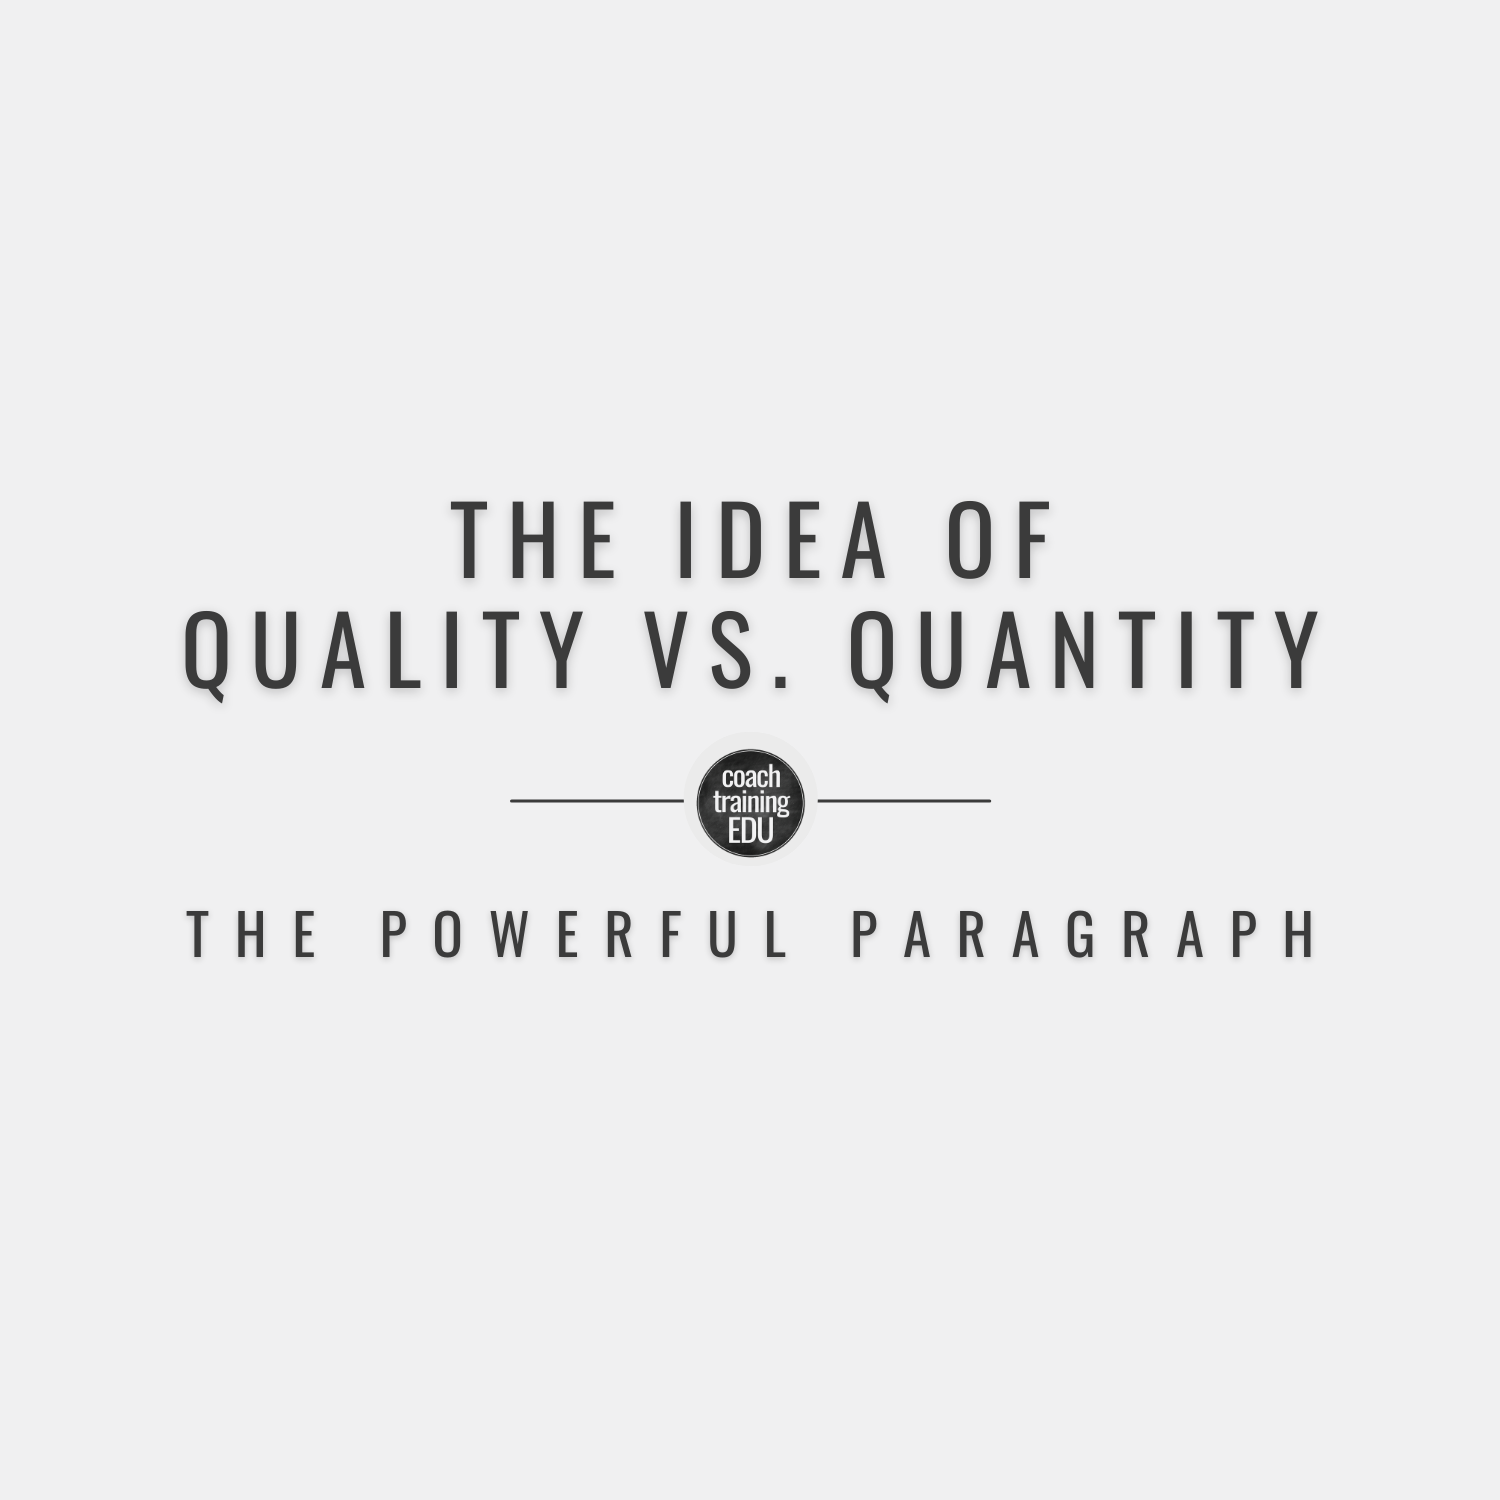 The Idea of Quality vs. Quantity